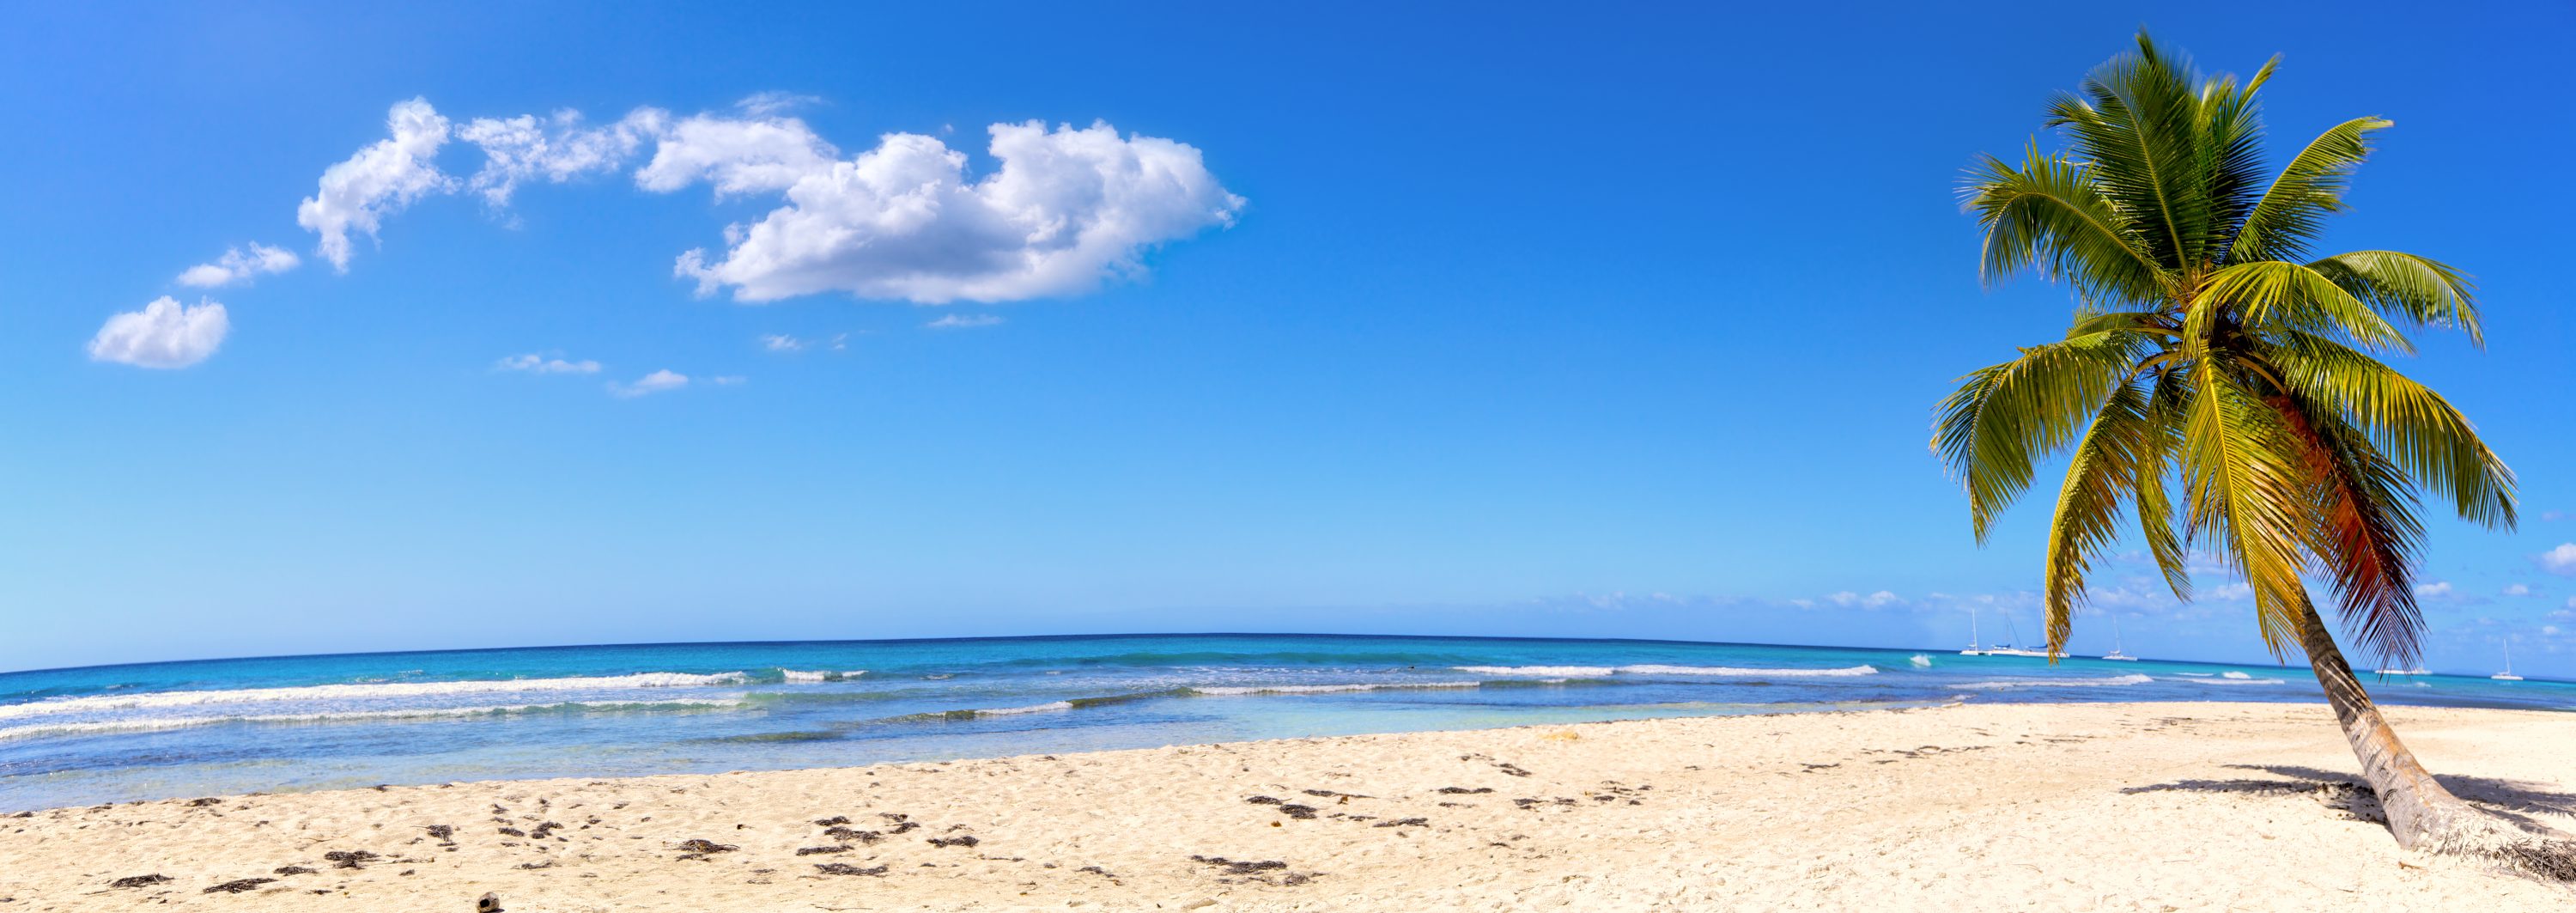 Sand beach panorama